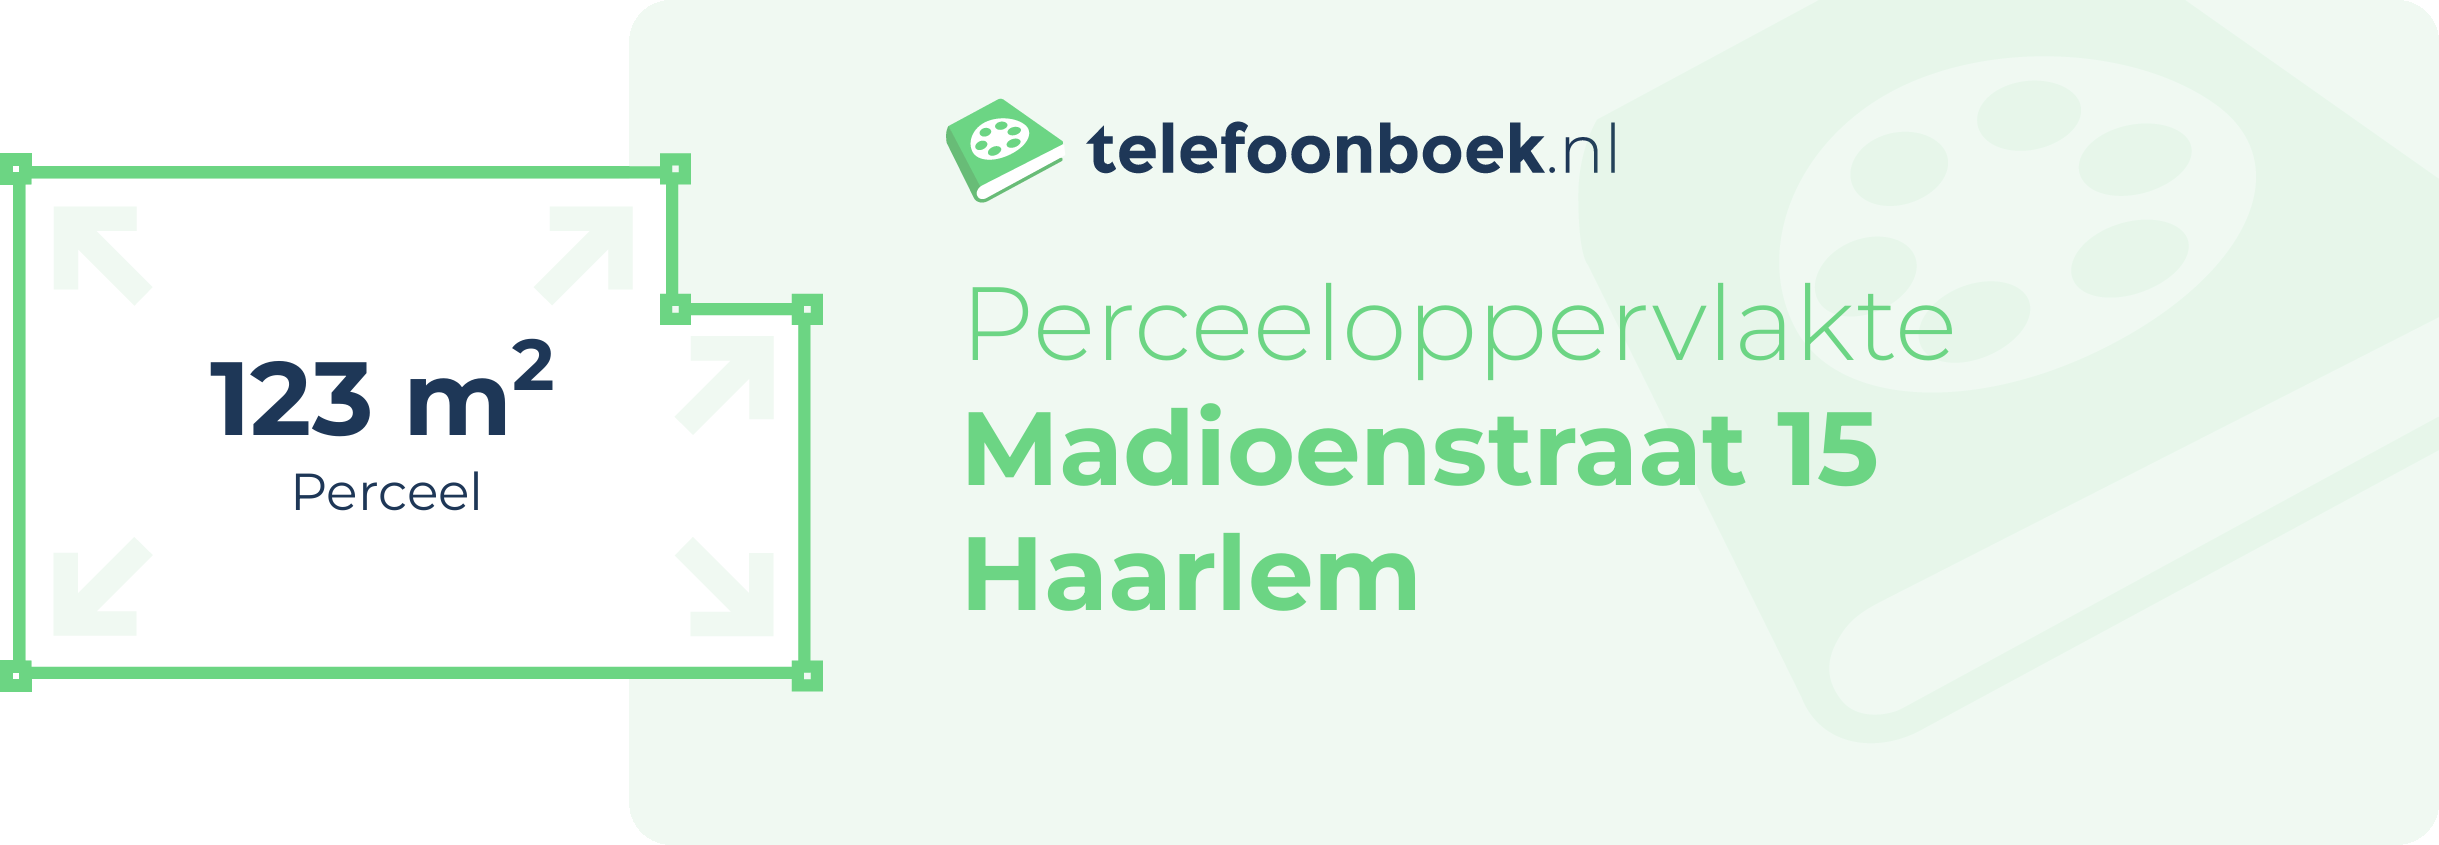 Perceeloppervlakte Madioenstraat 15 Haarlem